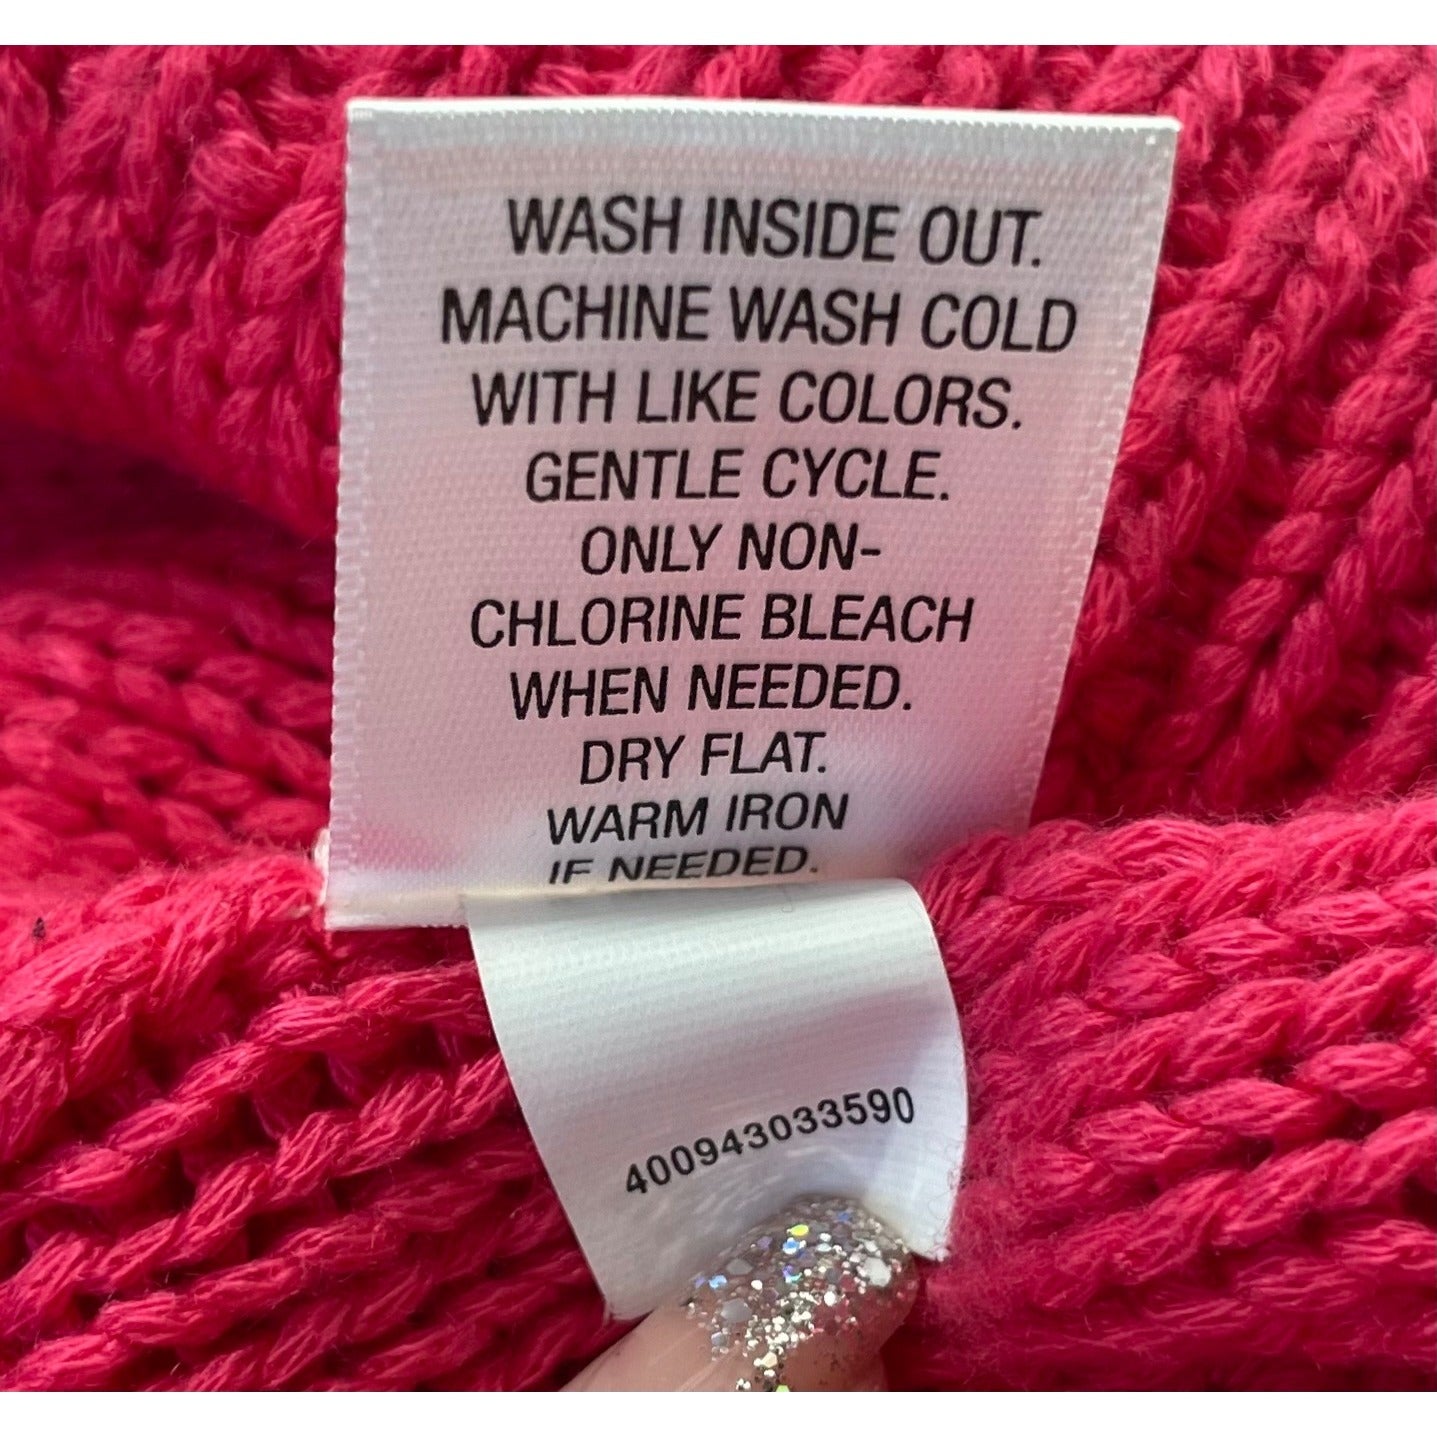 Apt. 9 Women’s Medium Fuchsia Crew Neck Cable Knit Sweater